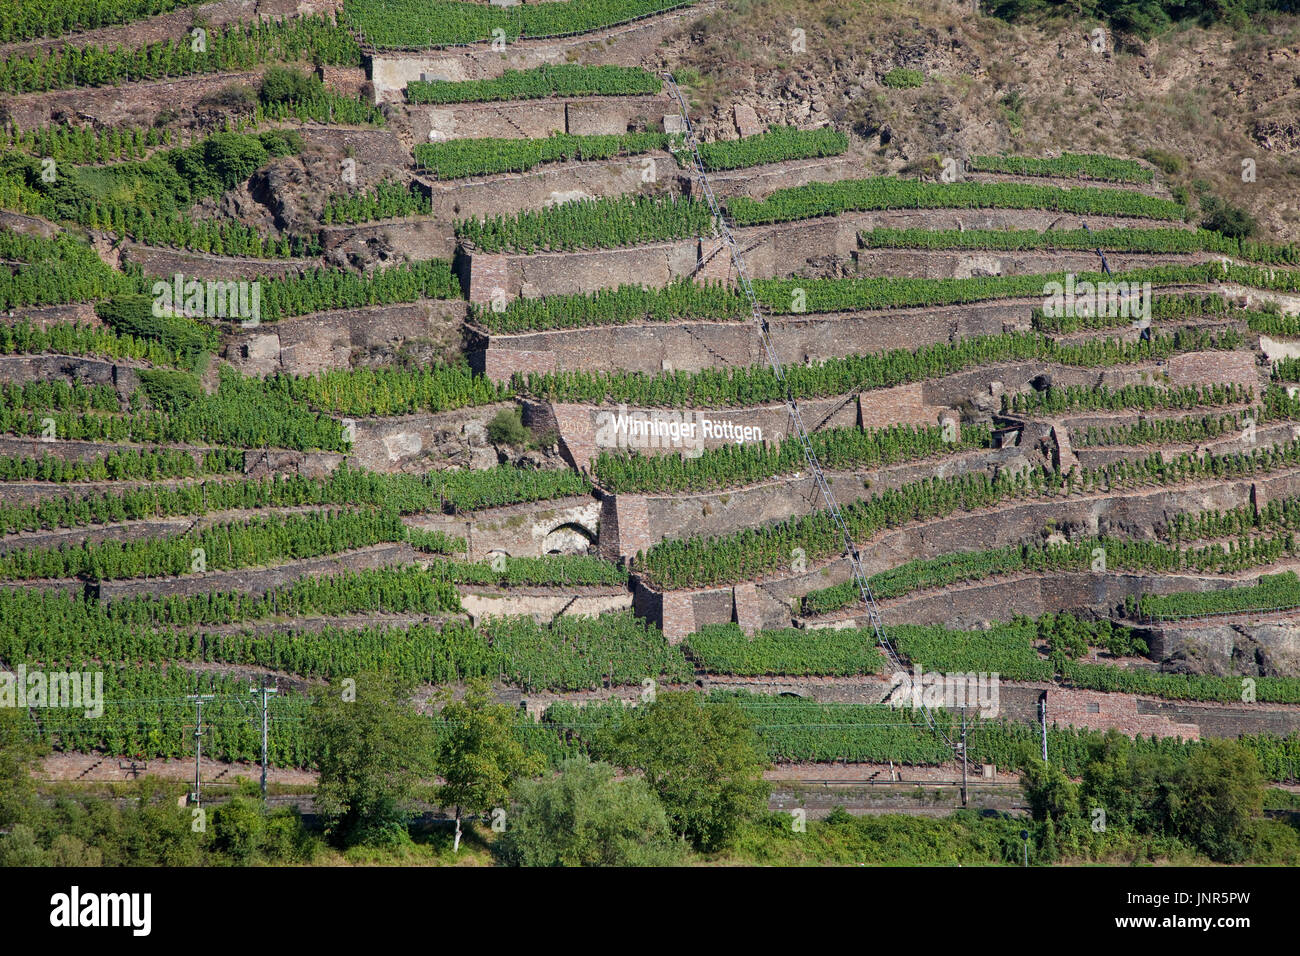 Terrassenmosel, Untermosel, Landkreis Mayen-Koblenz, Rheinland-Pfalz, Deutschland, Europa | wine terrace, Mosel river, Germany Stock Photo